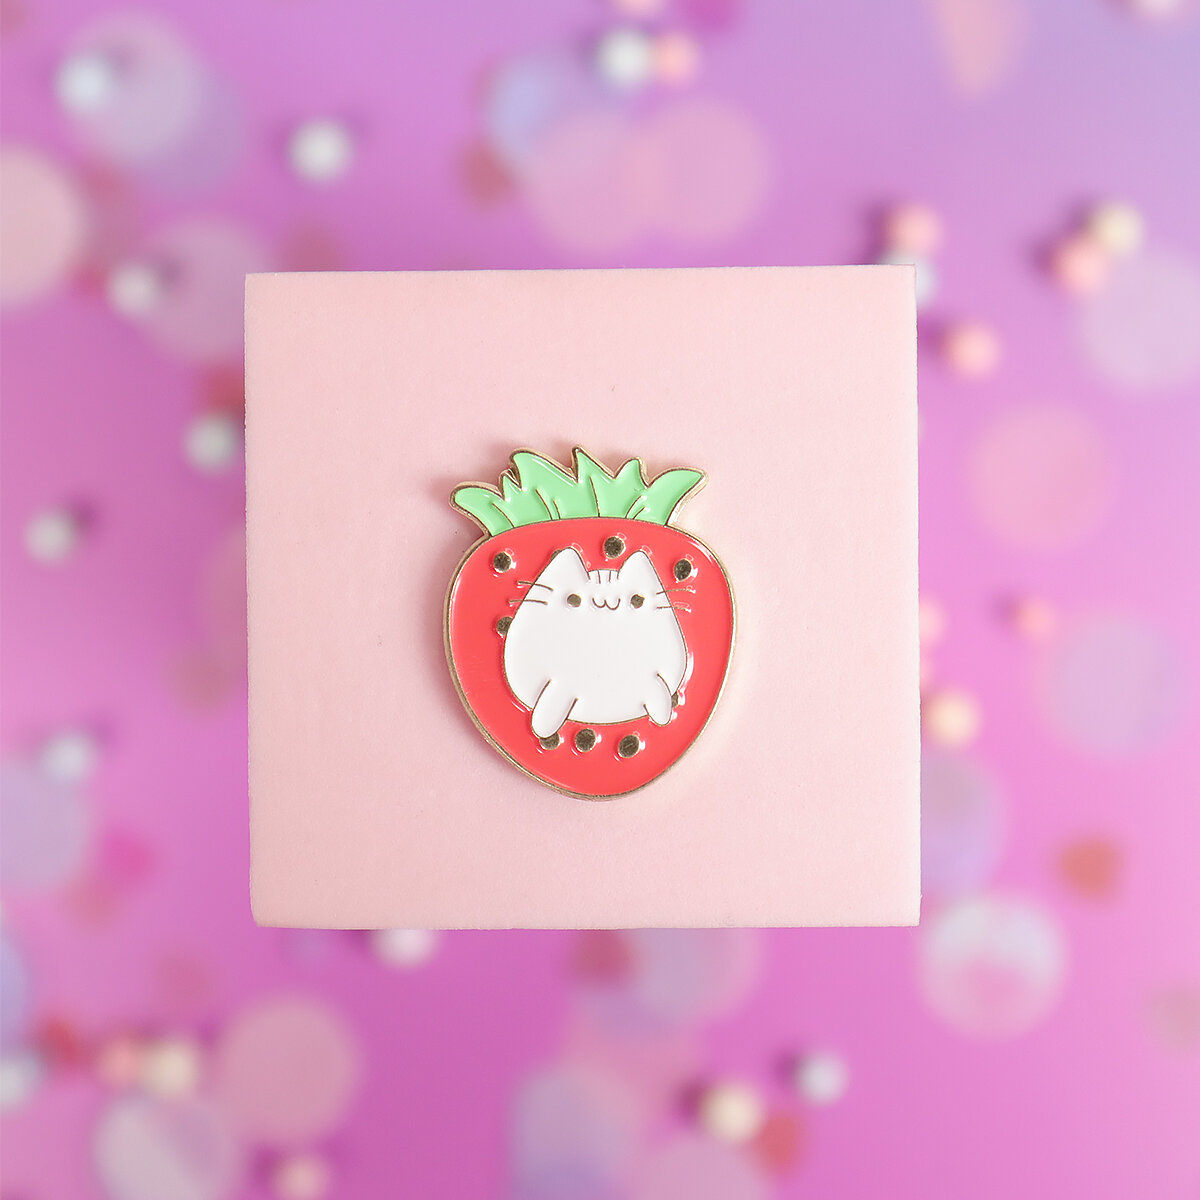 Pin - Katt i jordgubbe